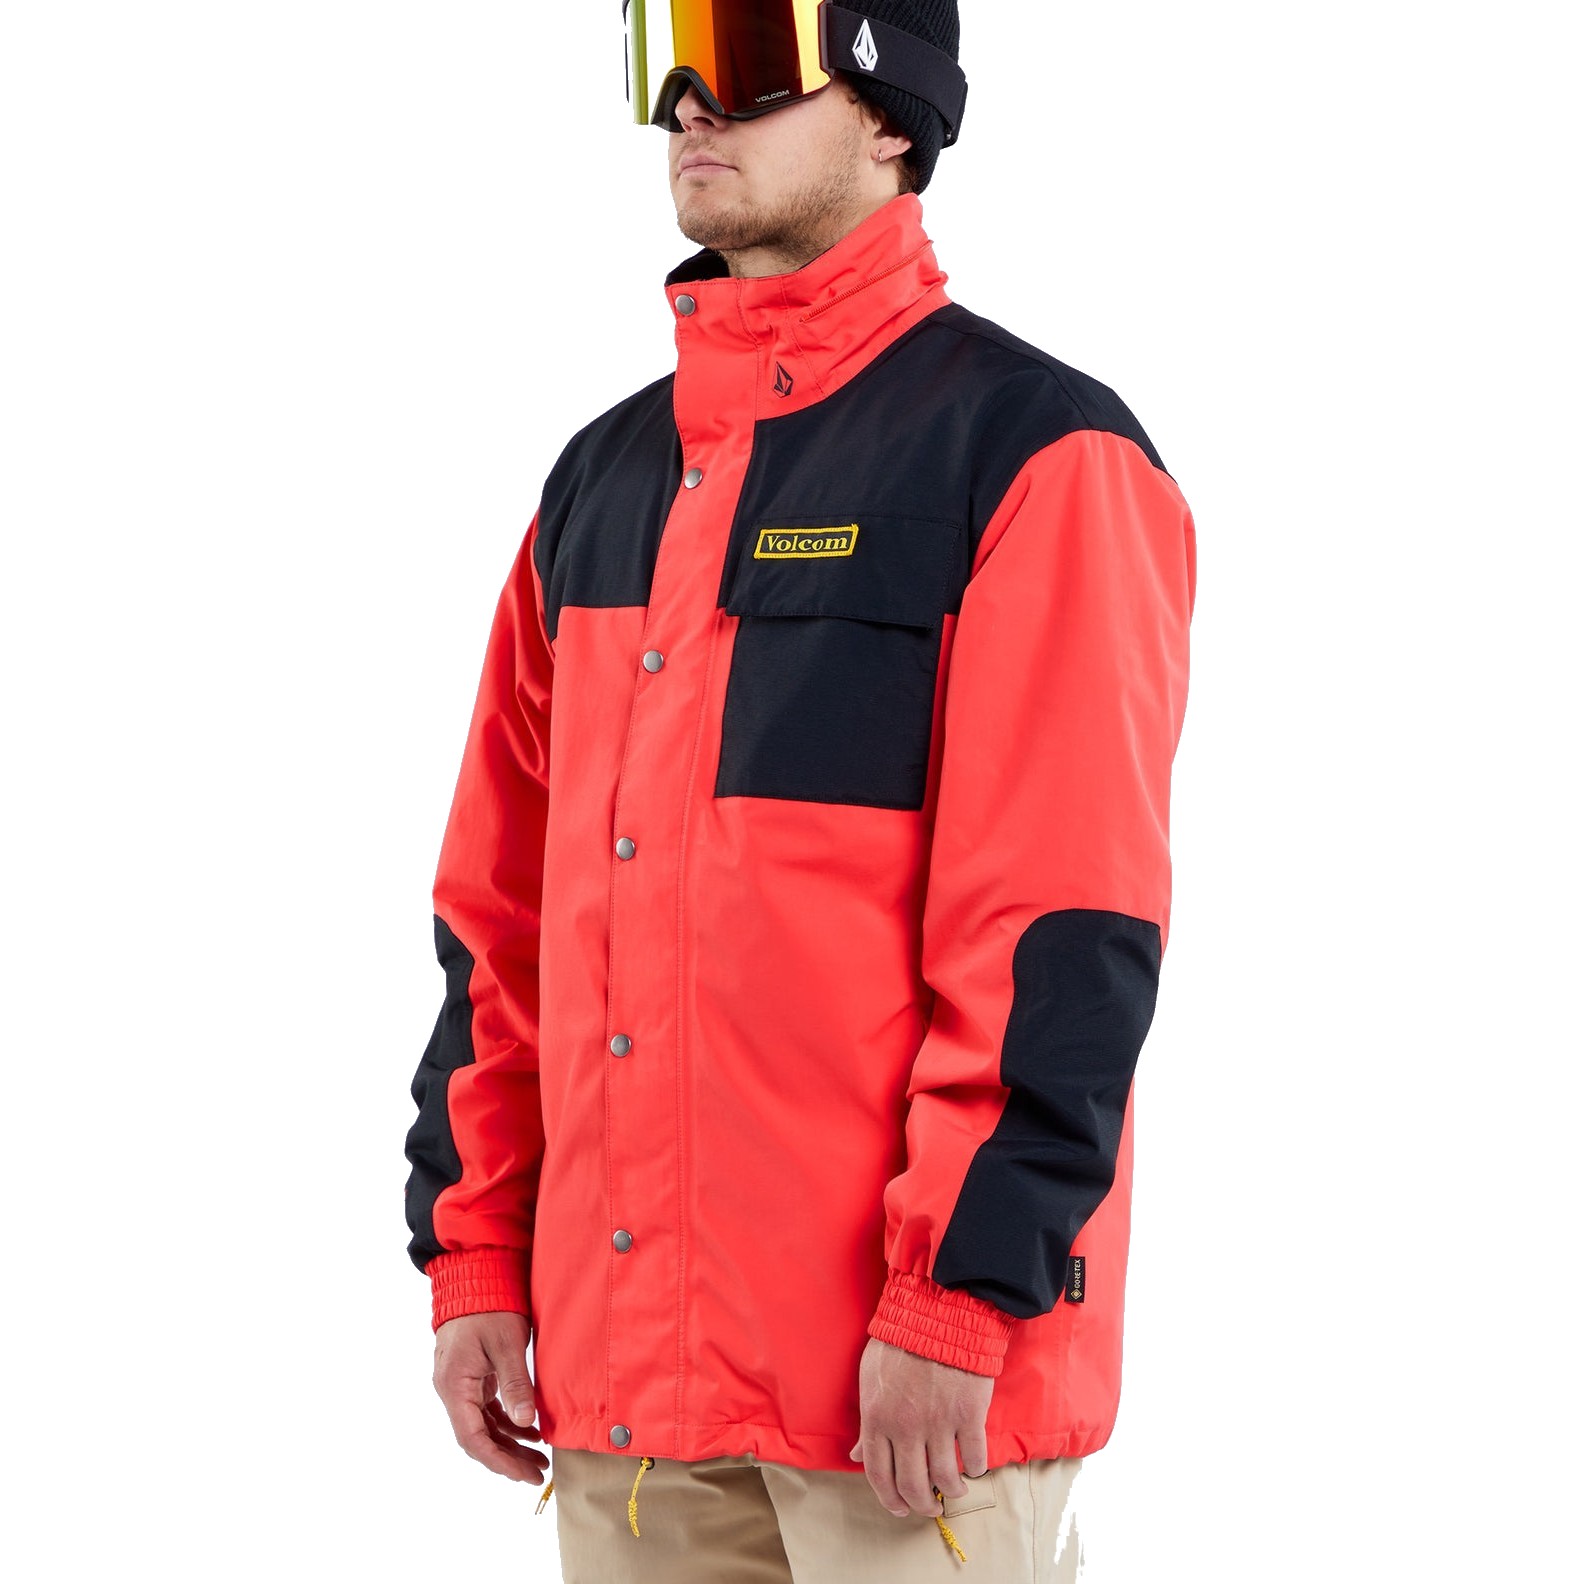 Volcom Longo Gore-Tex Ski/Snowboard Jacket